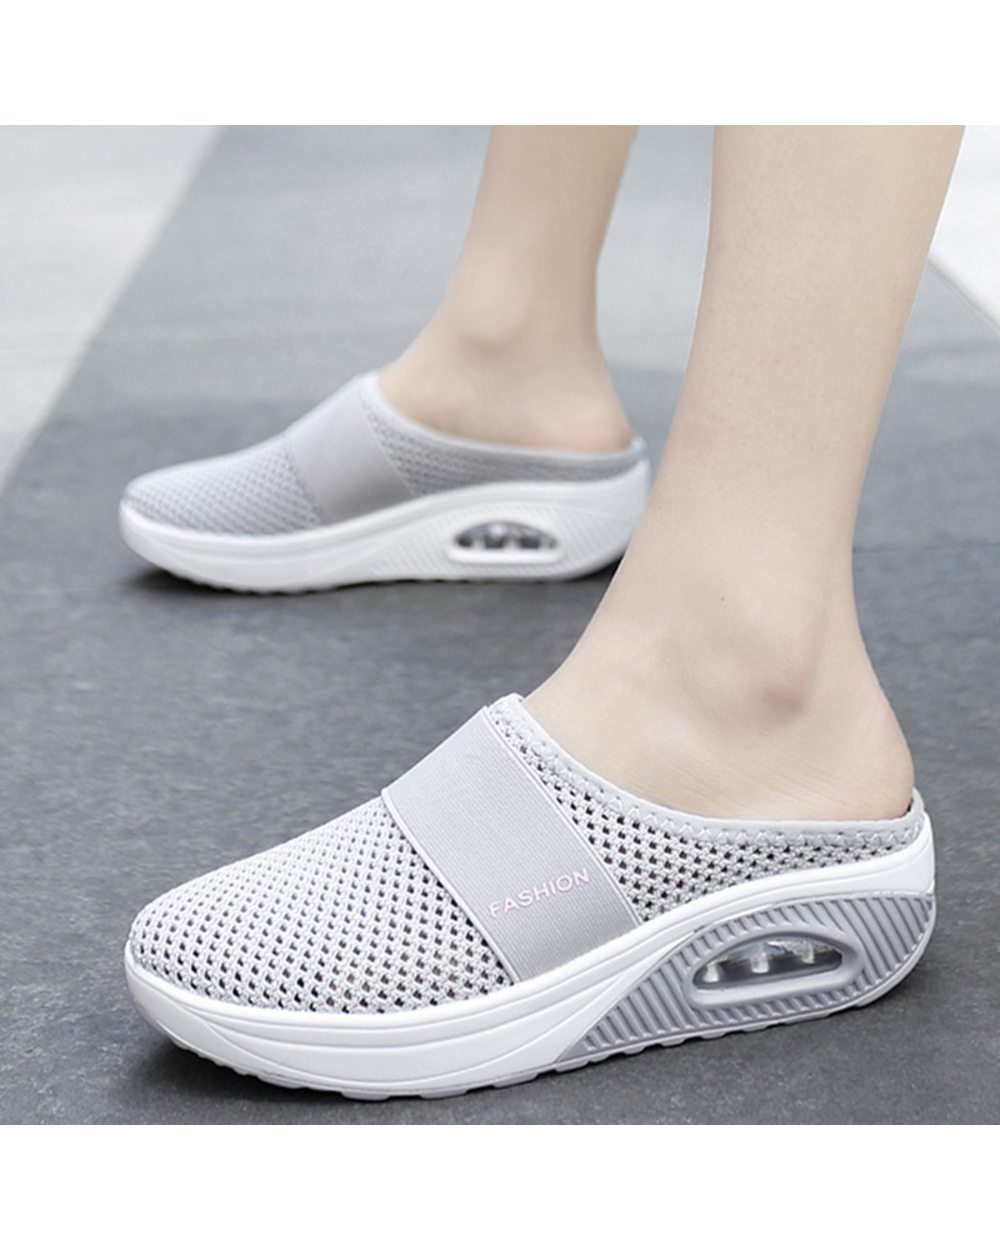 Women Sandals Fashion Wedges Platform Shoes Female Slides Women's Slippers Breathable Mesh Lightweight Ladies Footwear